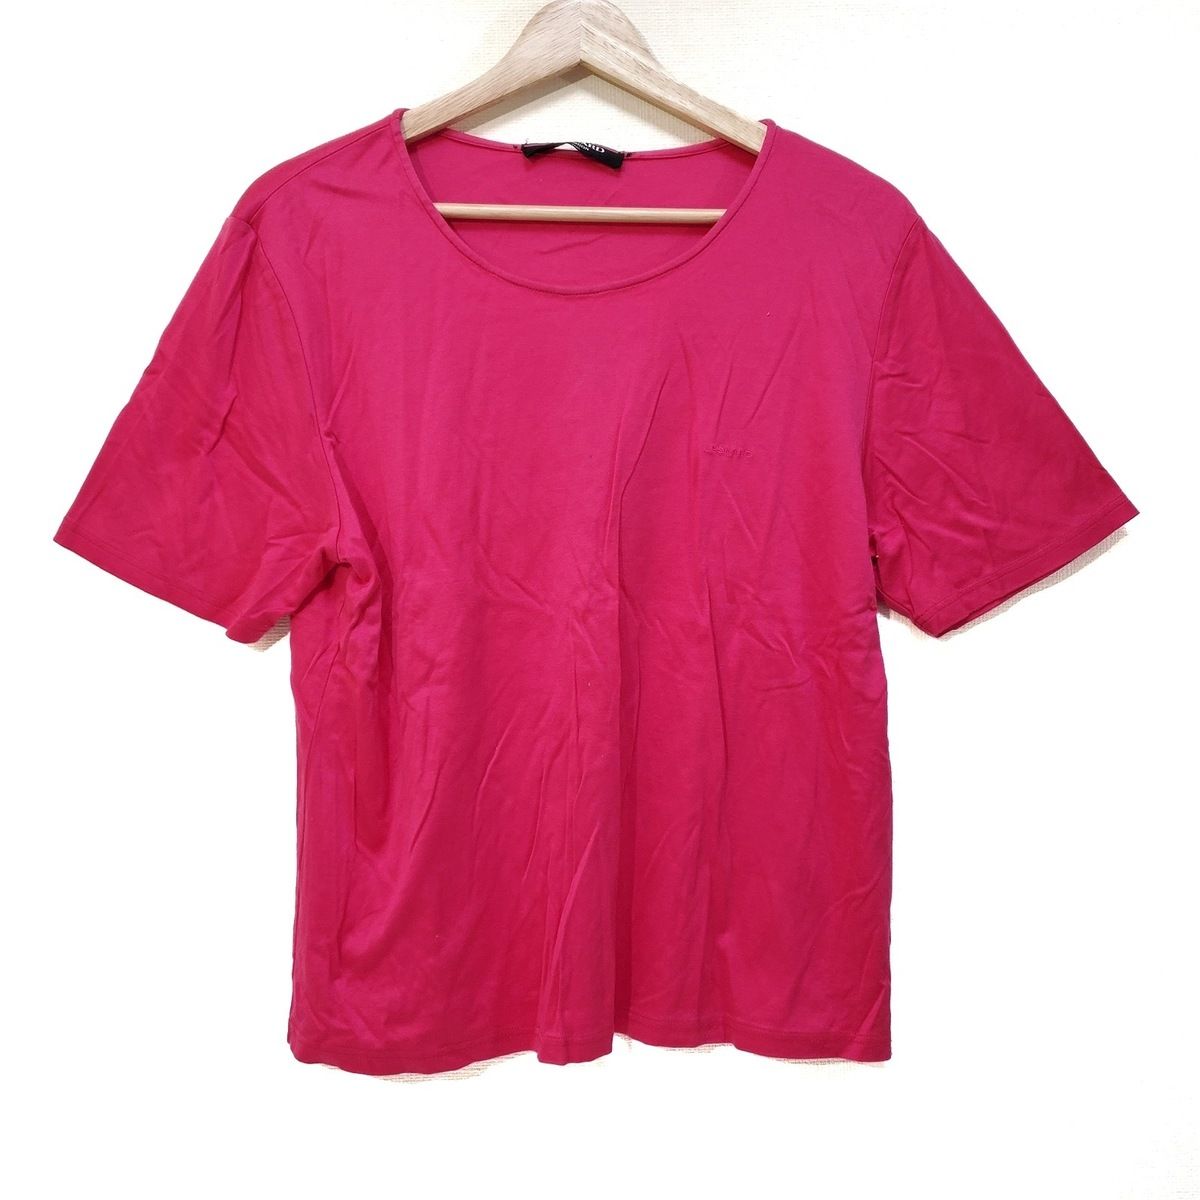 LEONARD(レオナール) 半袖Tシャツ サイズL レディース美品 - ピンク